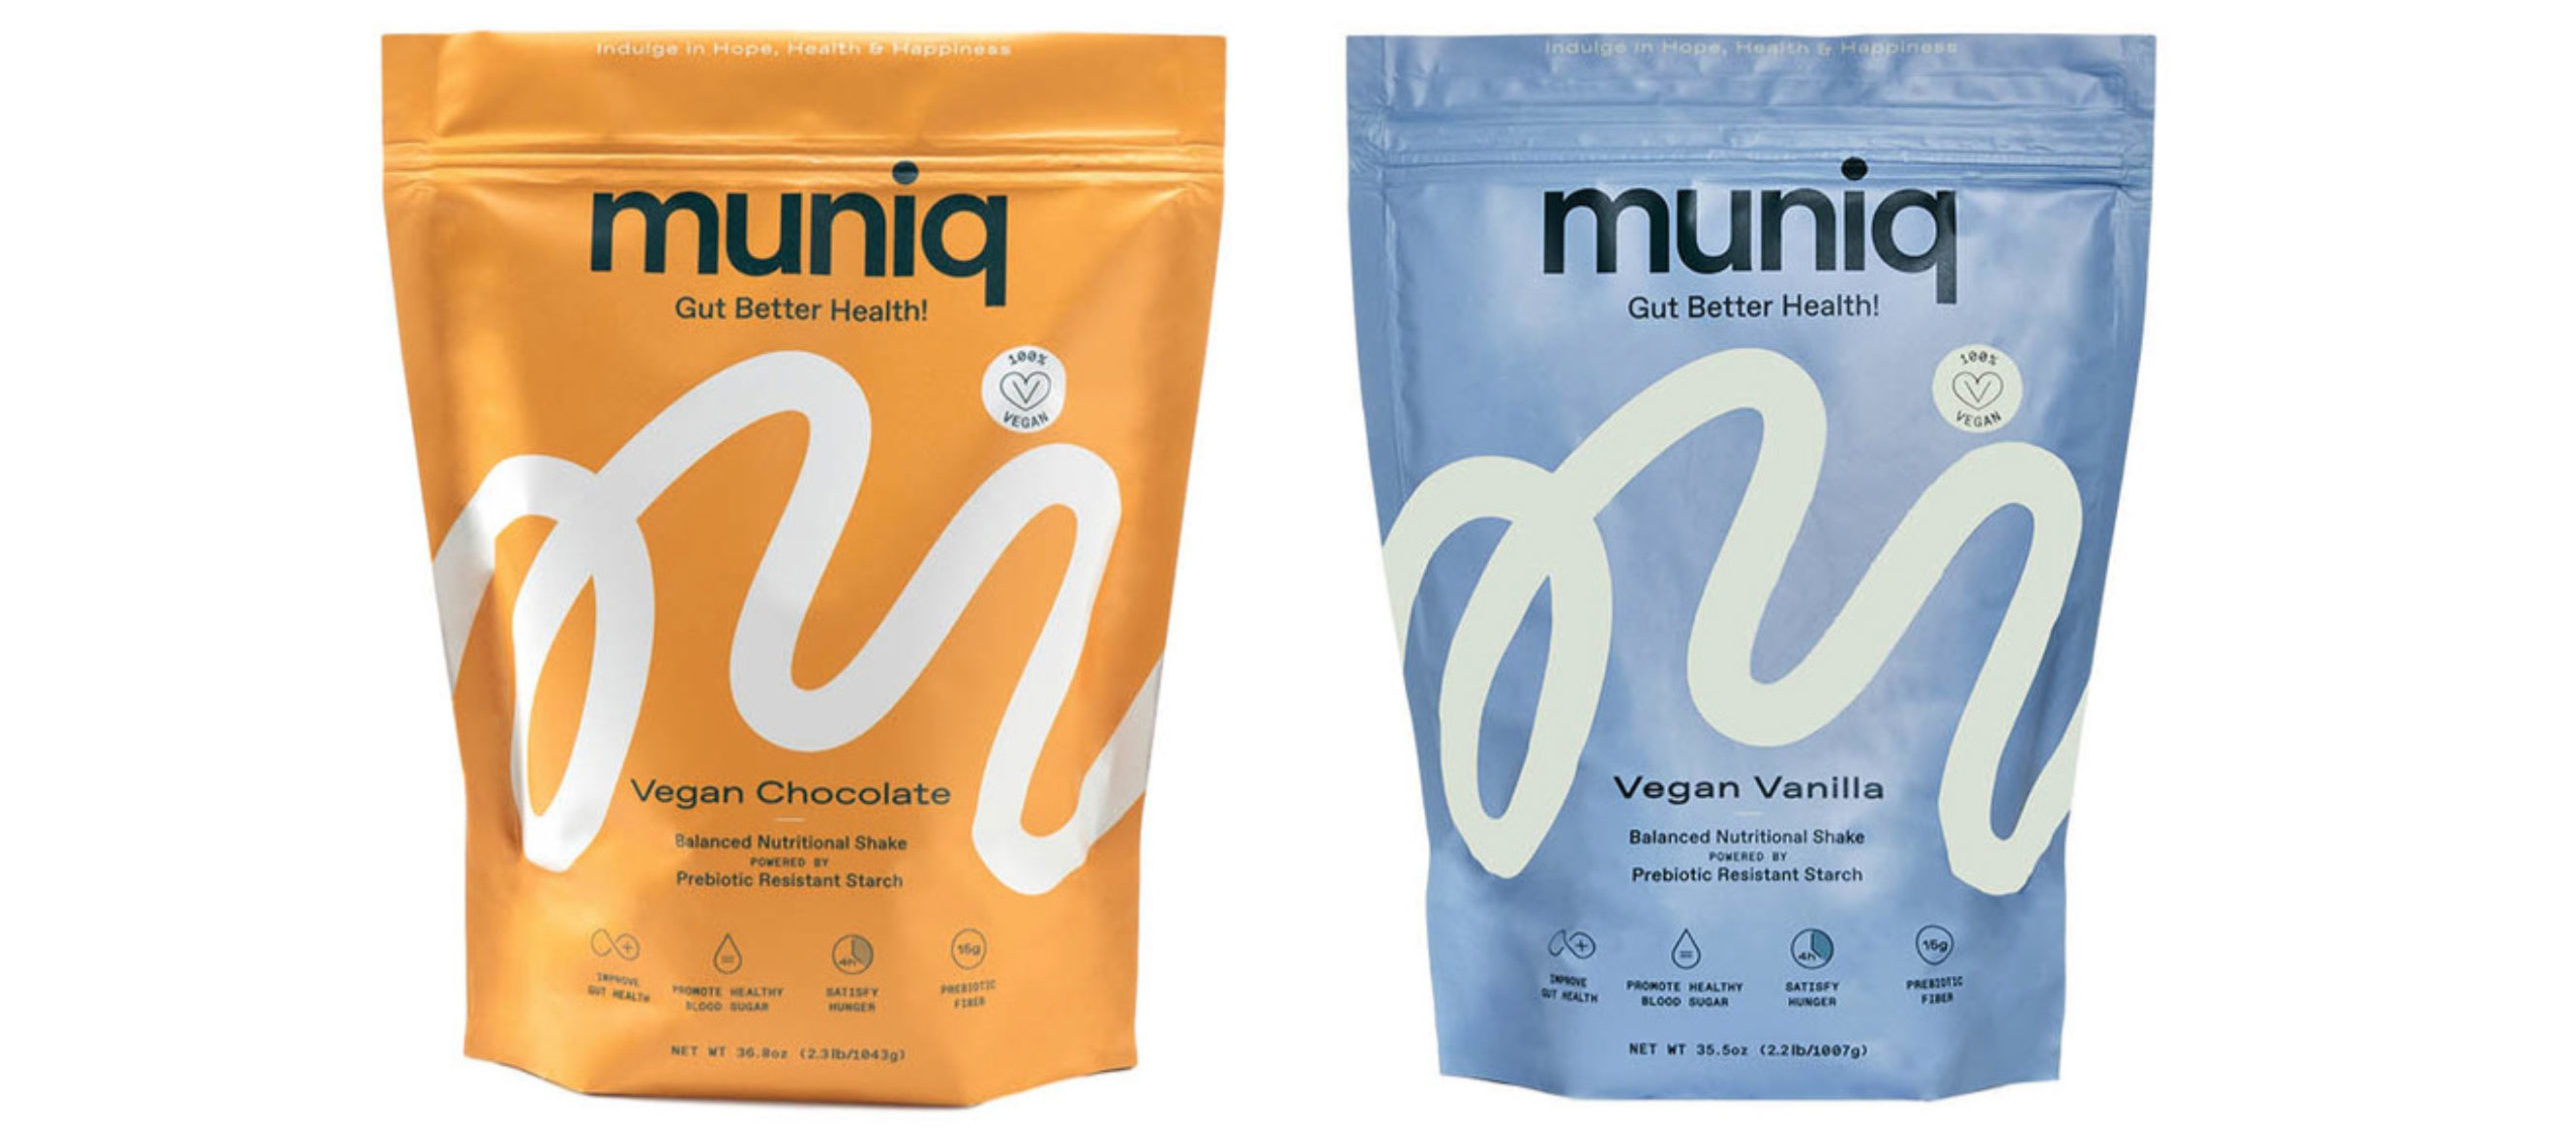 muniq prebiotic resistant starch shake brand packaging